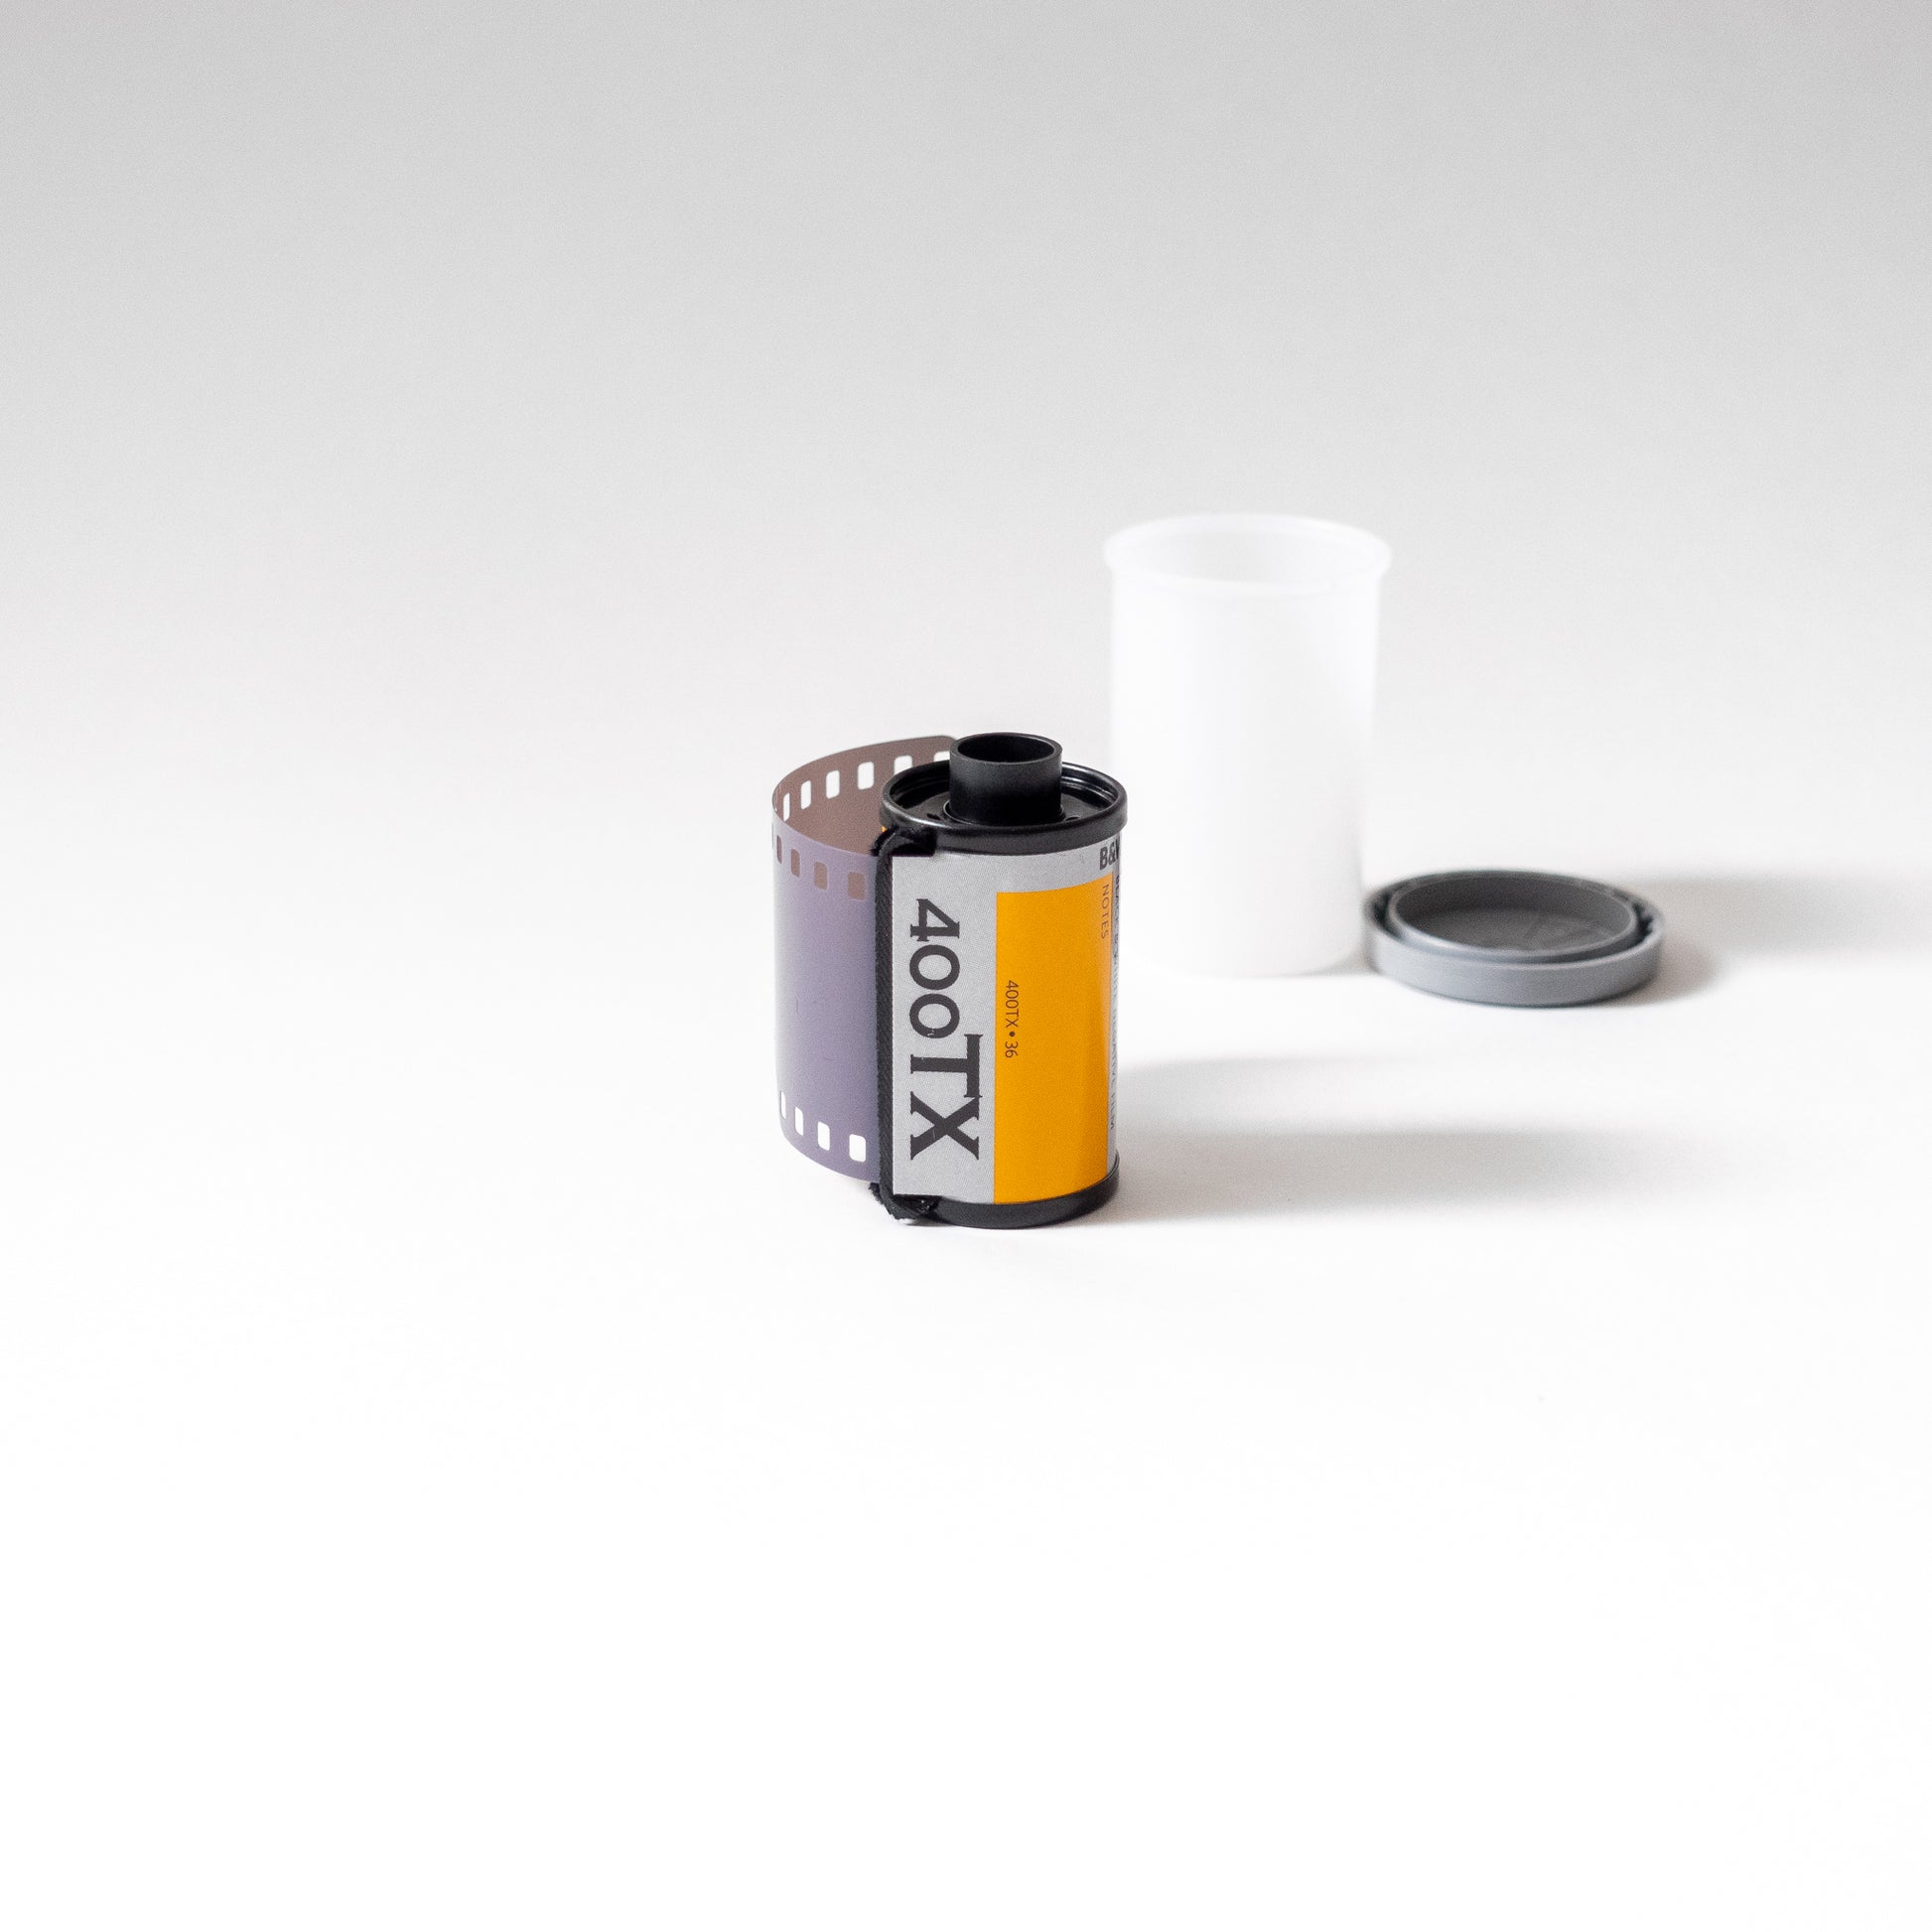 Kodak Professional Tri-X 400 Black and White Negative Film (35mm Roll Film,  36 Exposures)